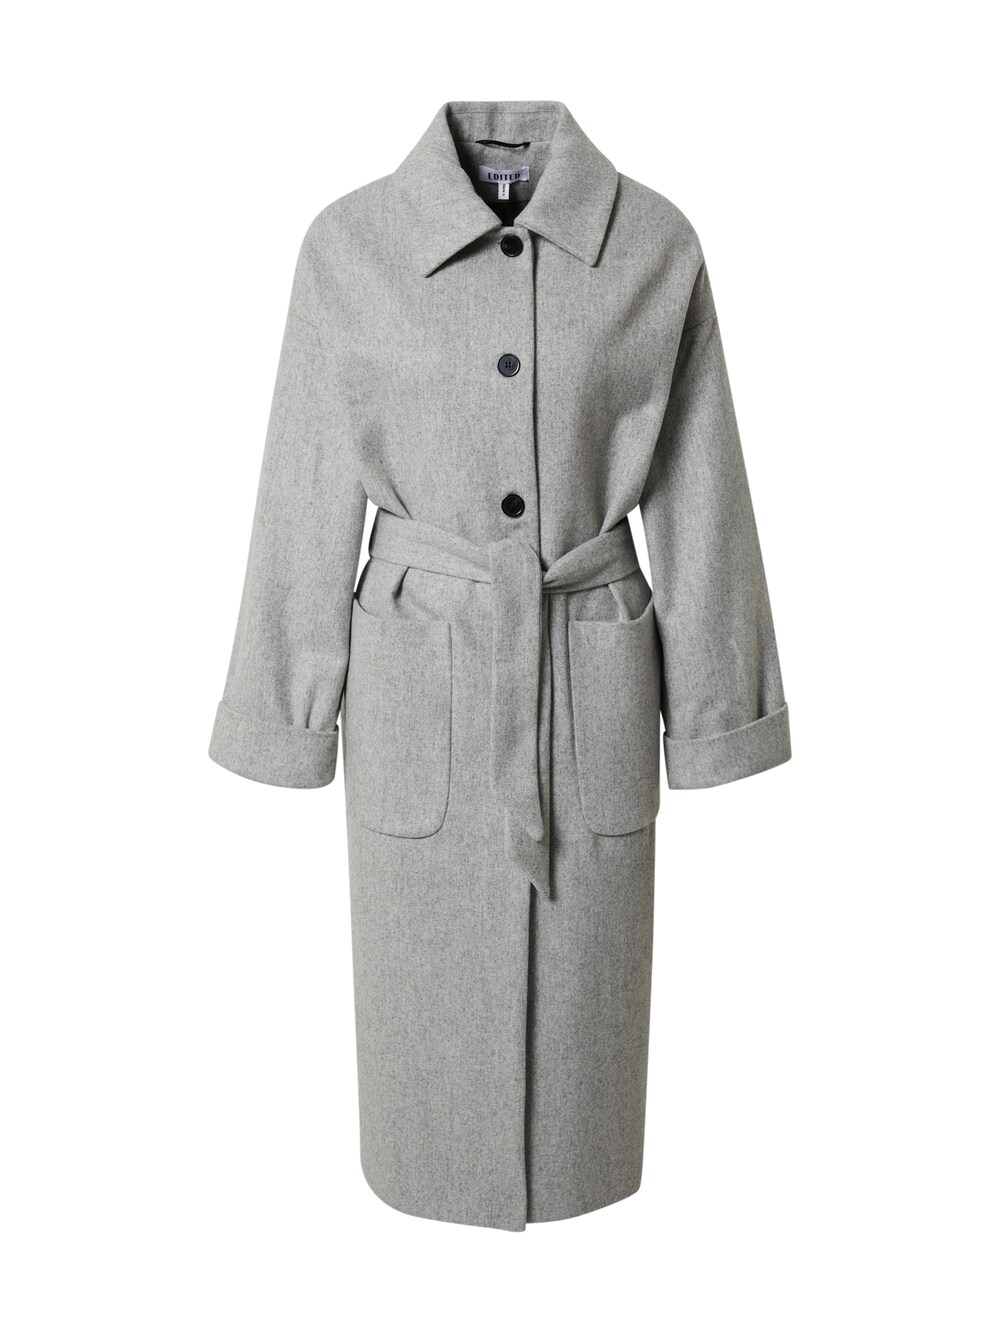 Межсезонное пальто EDITED Tosca, пестрый серый межсезонное пальто s oliver пестрый бежевый